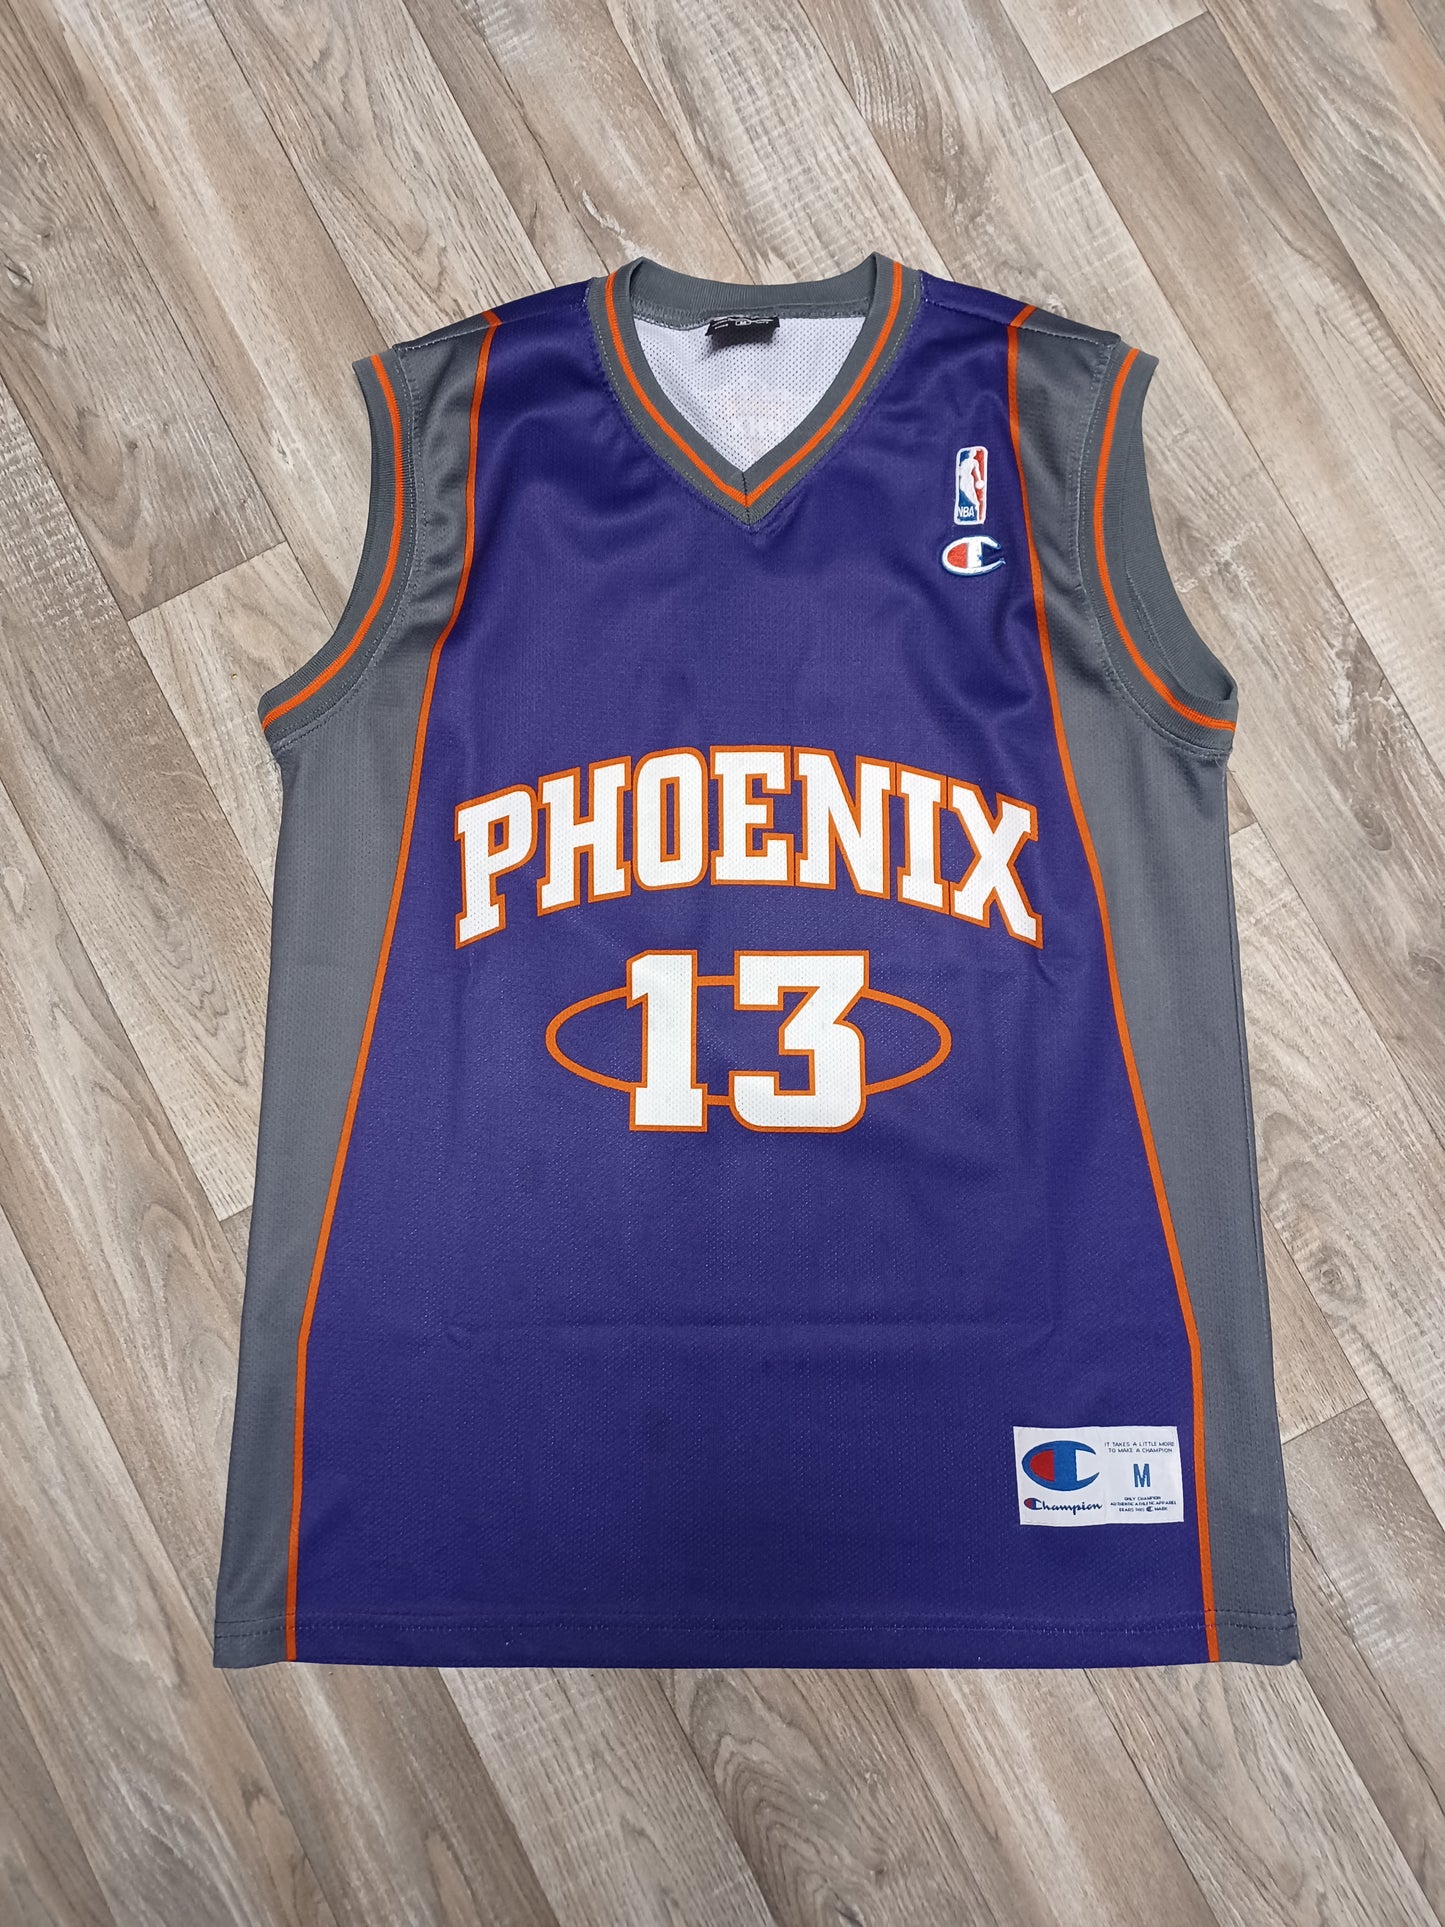 Steve Nash Phoenix Suns Jersey Size Medium